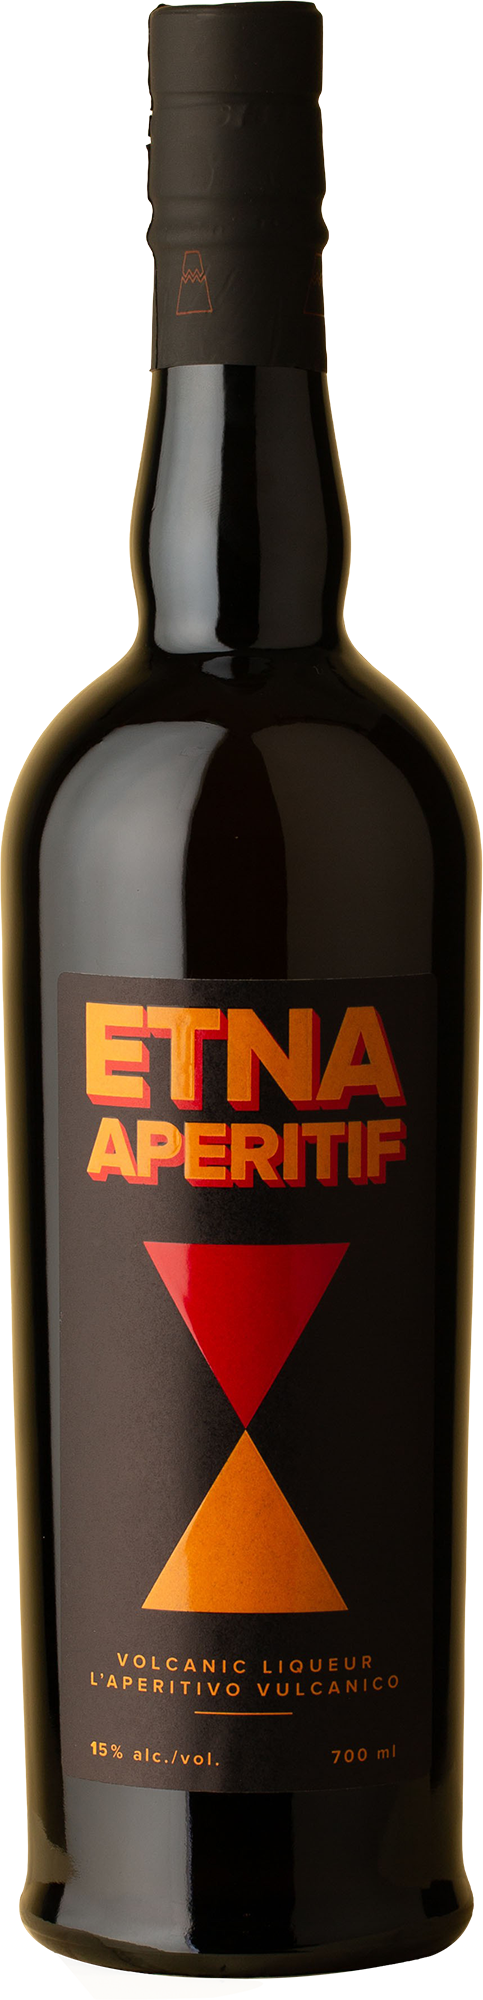 Aetnae - Etna Aperitif 700mL Not Wine